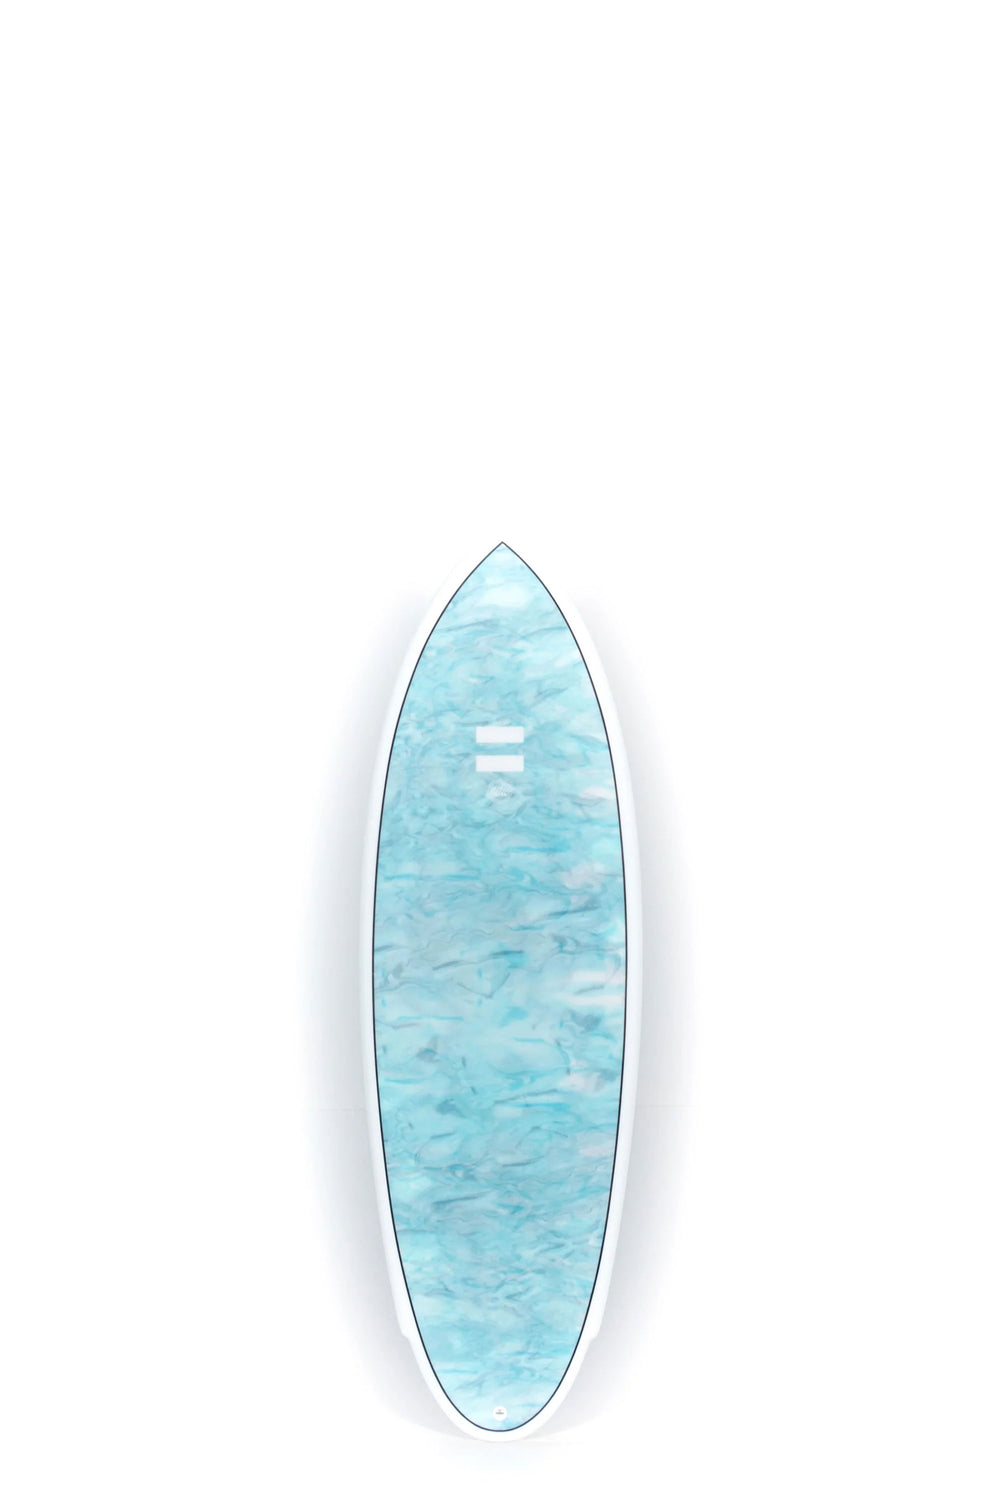 Pukas Surf Shop - Indio Surfboard - Endurance - RANCHO Swirl - 5'8